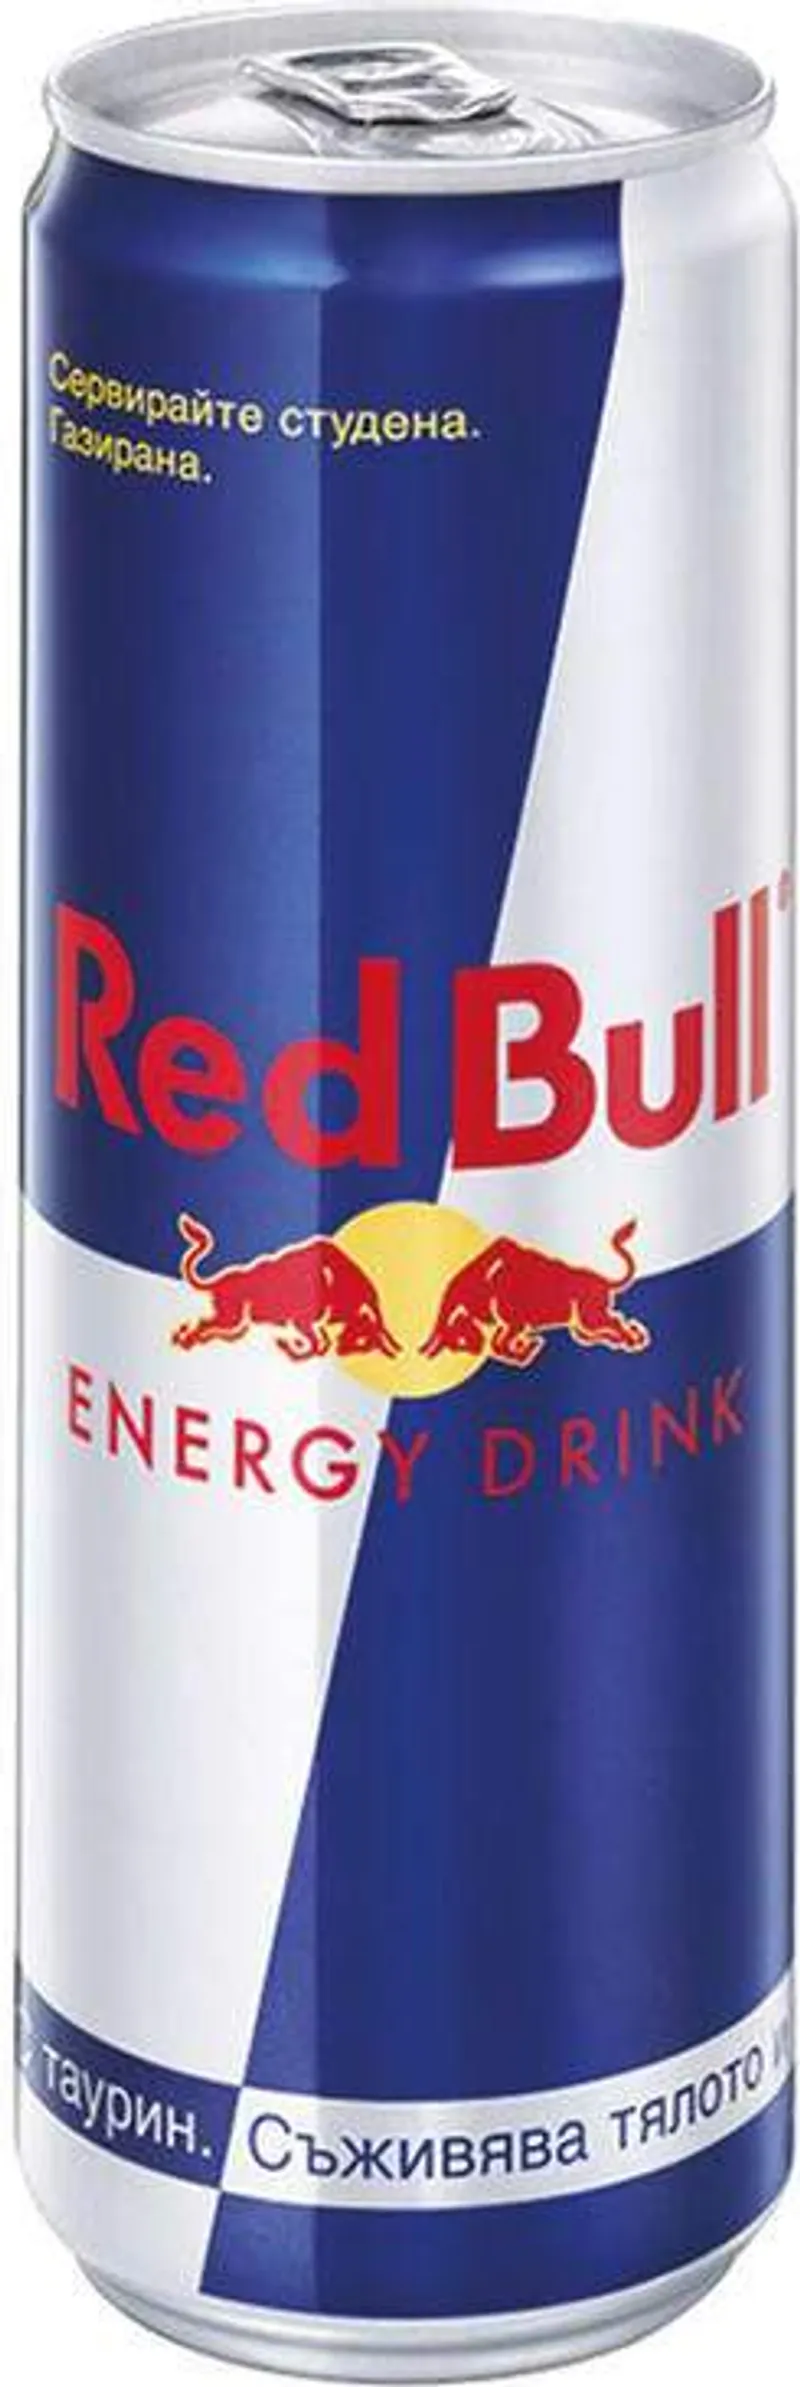 Енергийна напитка Red Bull (250мл)